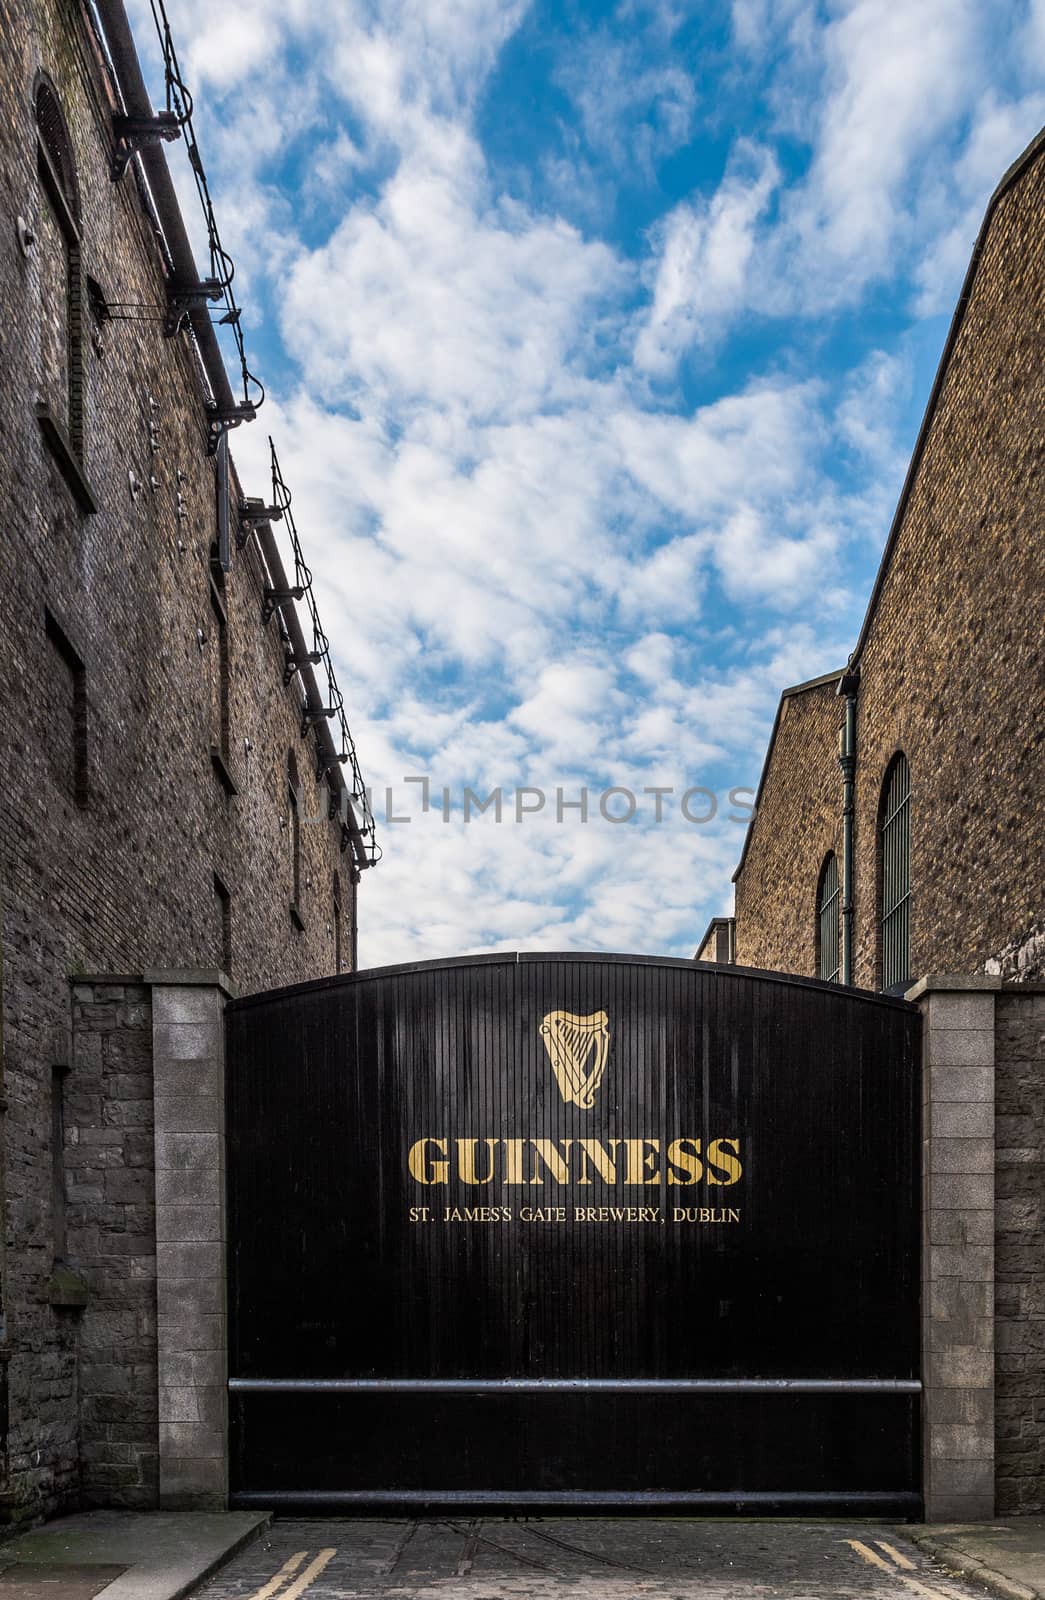 Guinness Experience center Dublin Ireland Beer